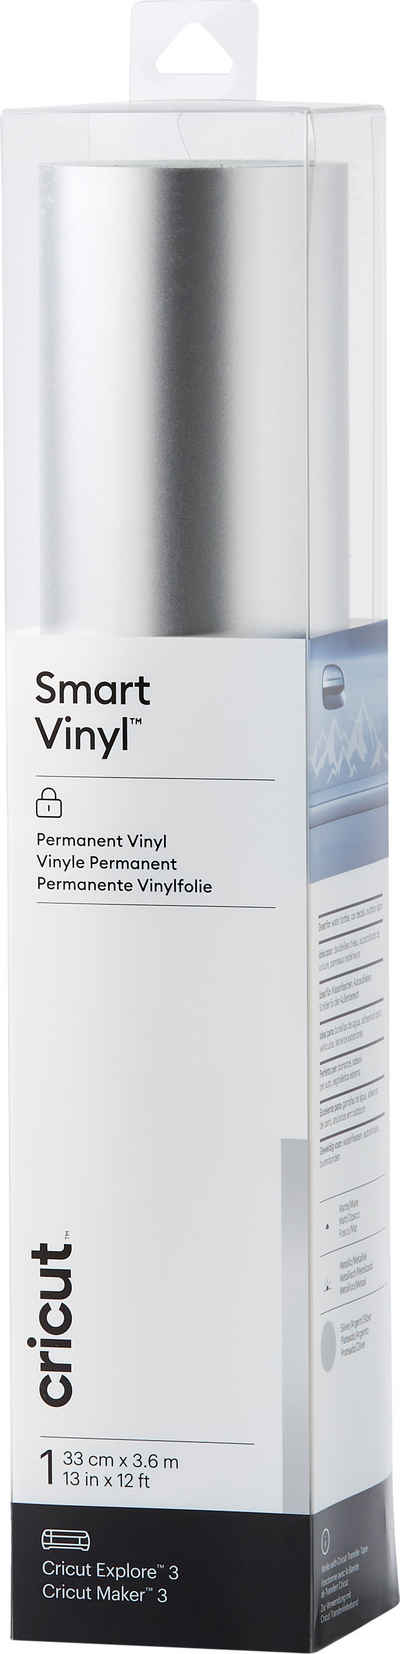 Cricut Dekorationsfolie Vinylfolie Smart Vinyl Permanent, selbstklebend 360 cm x 33 cm